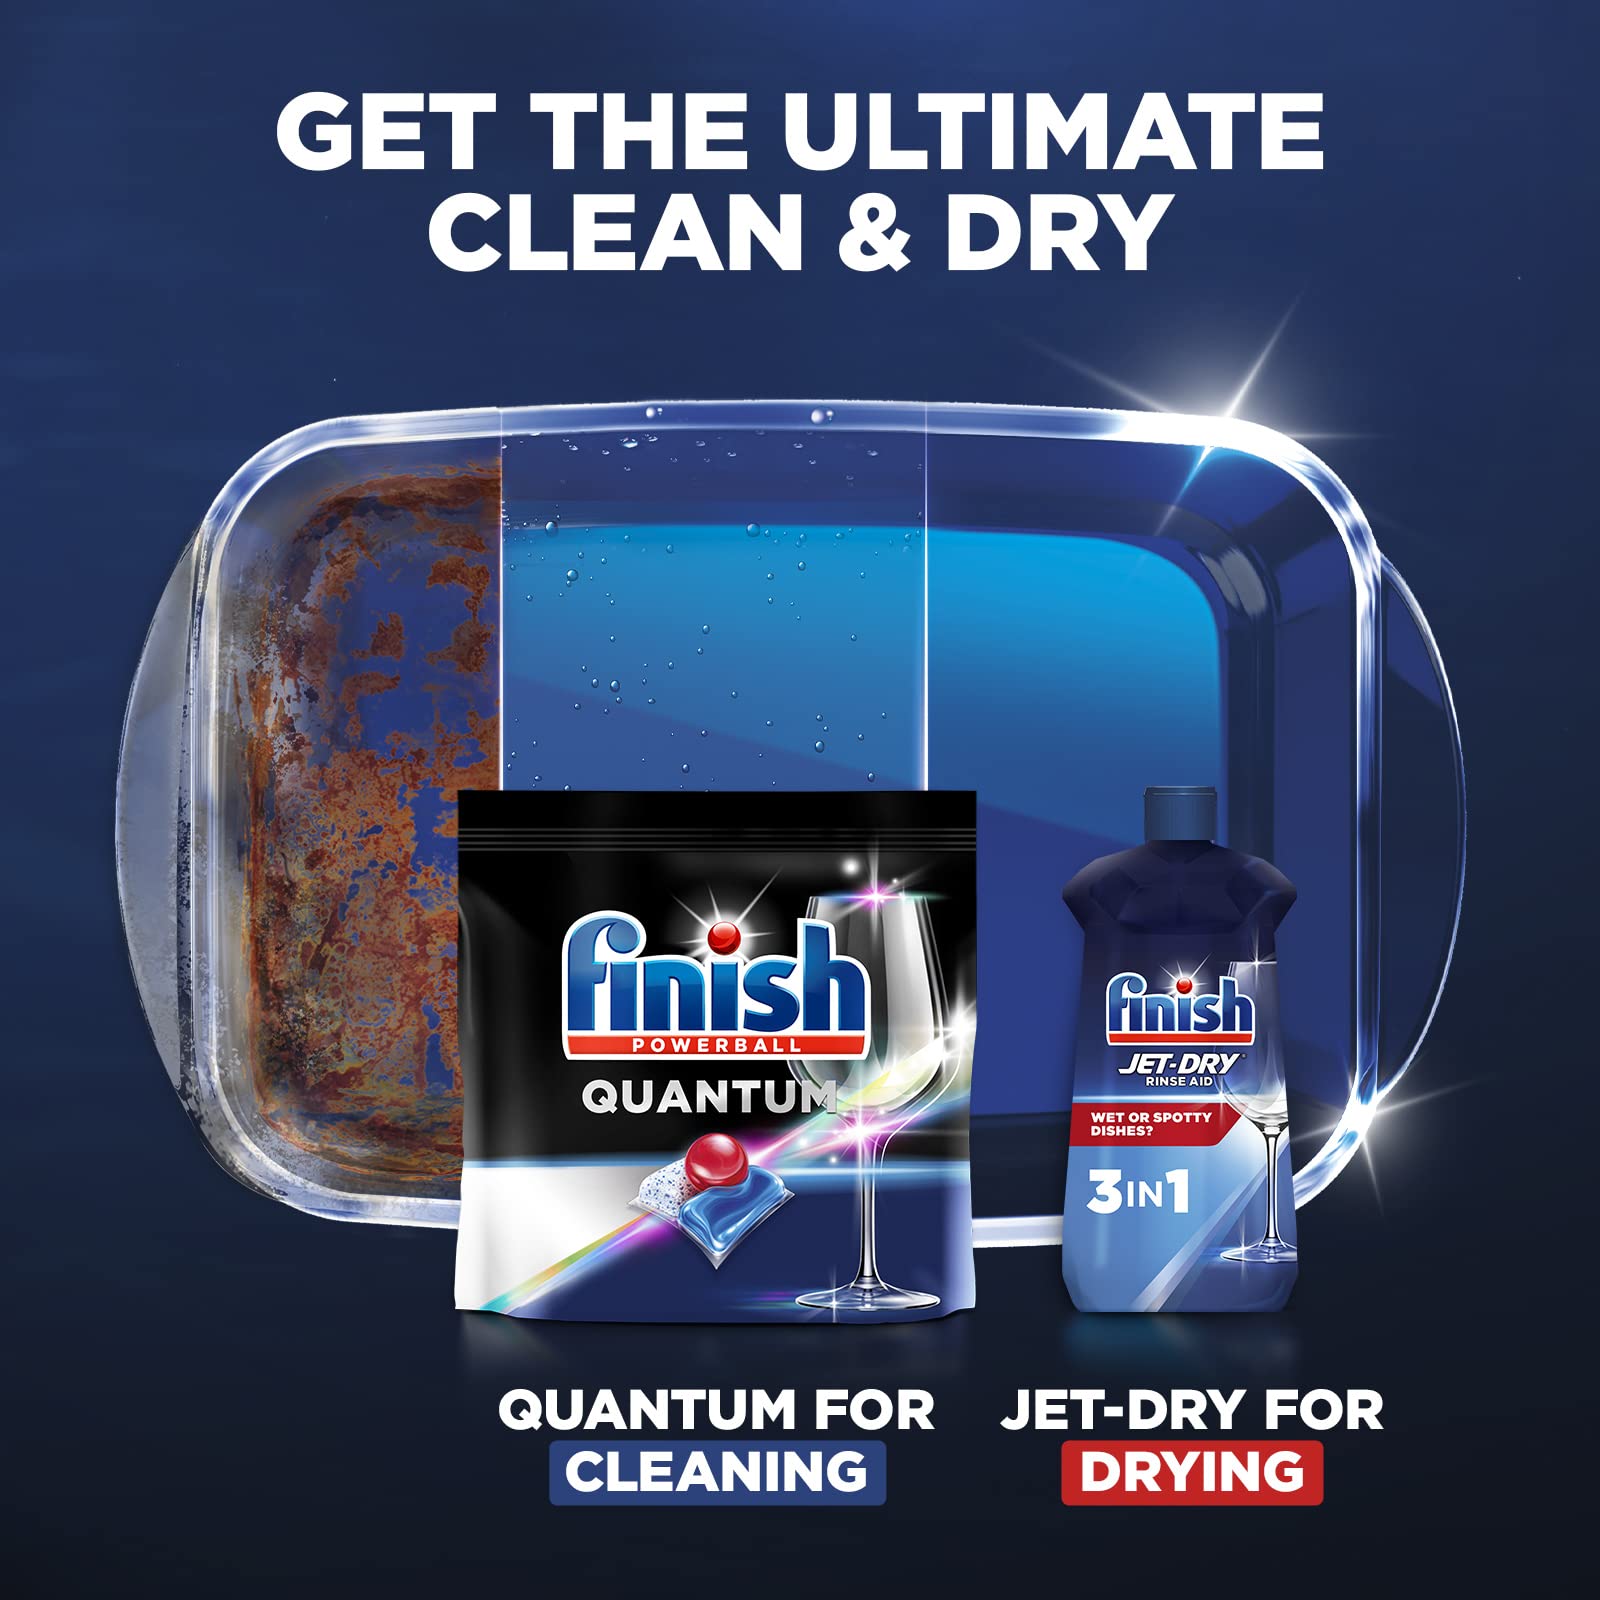 Finish - Quantum - 64ct - Dishwasher Detergent - Powerball - Ultimate Clean & Shine - Dishwashing Tablets - Dish Tabs